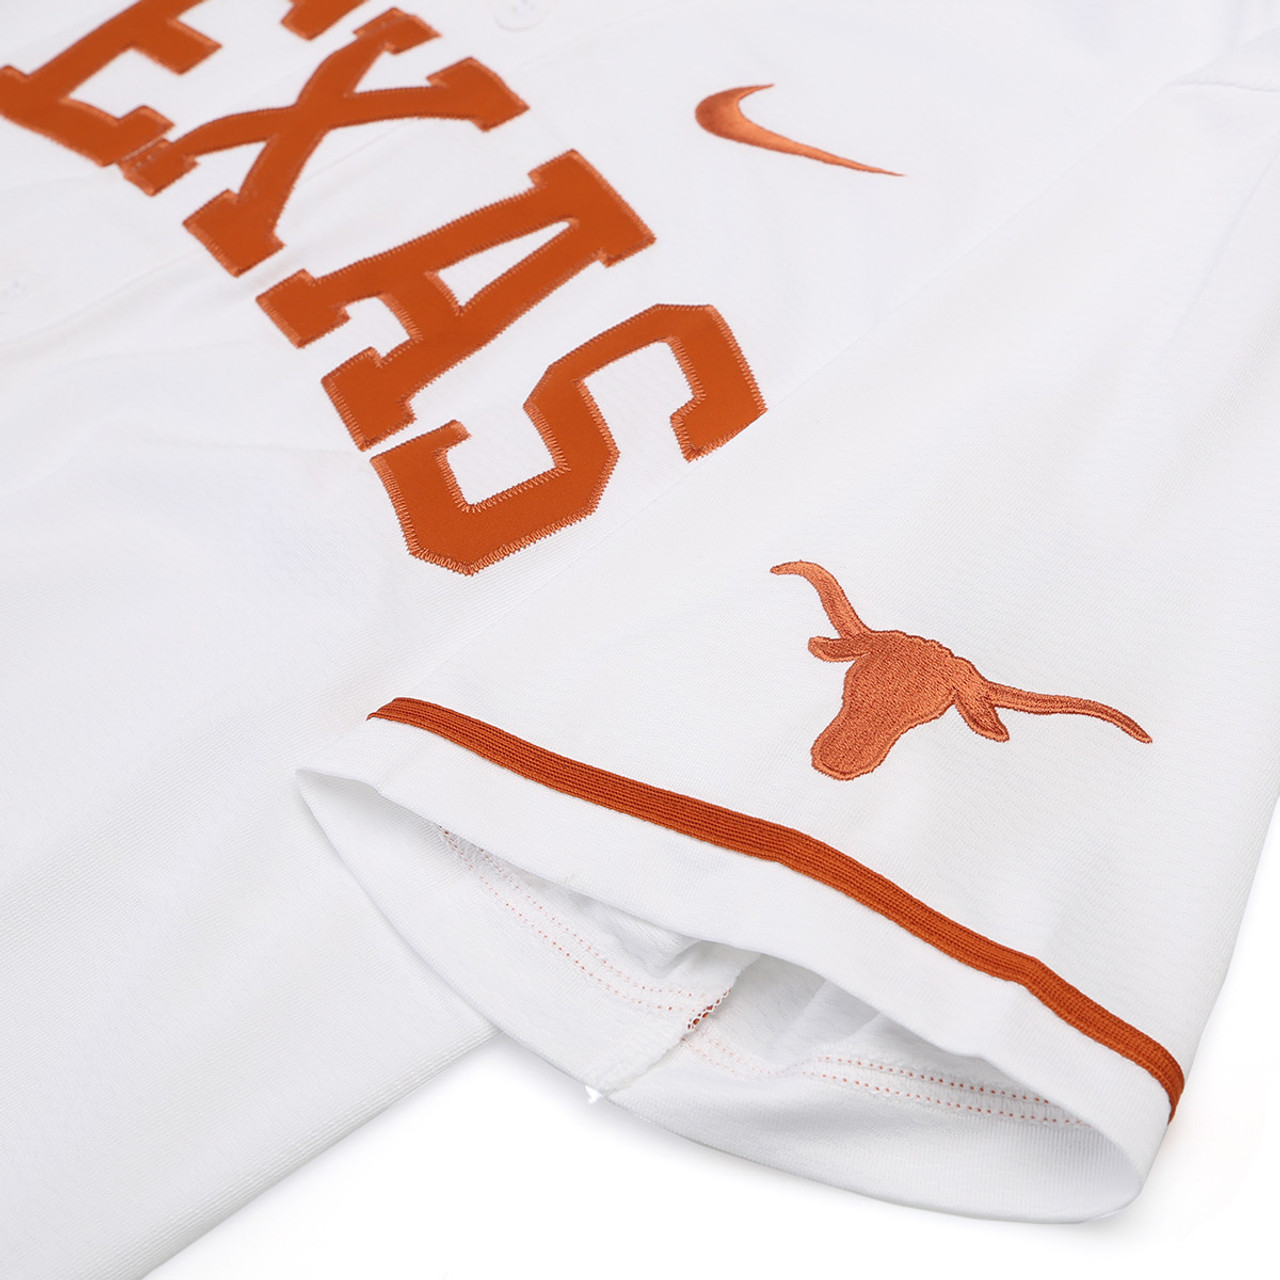 Texas Longhorn Nike White Replica Baseball Jersey (P33290W)